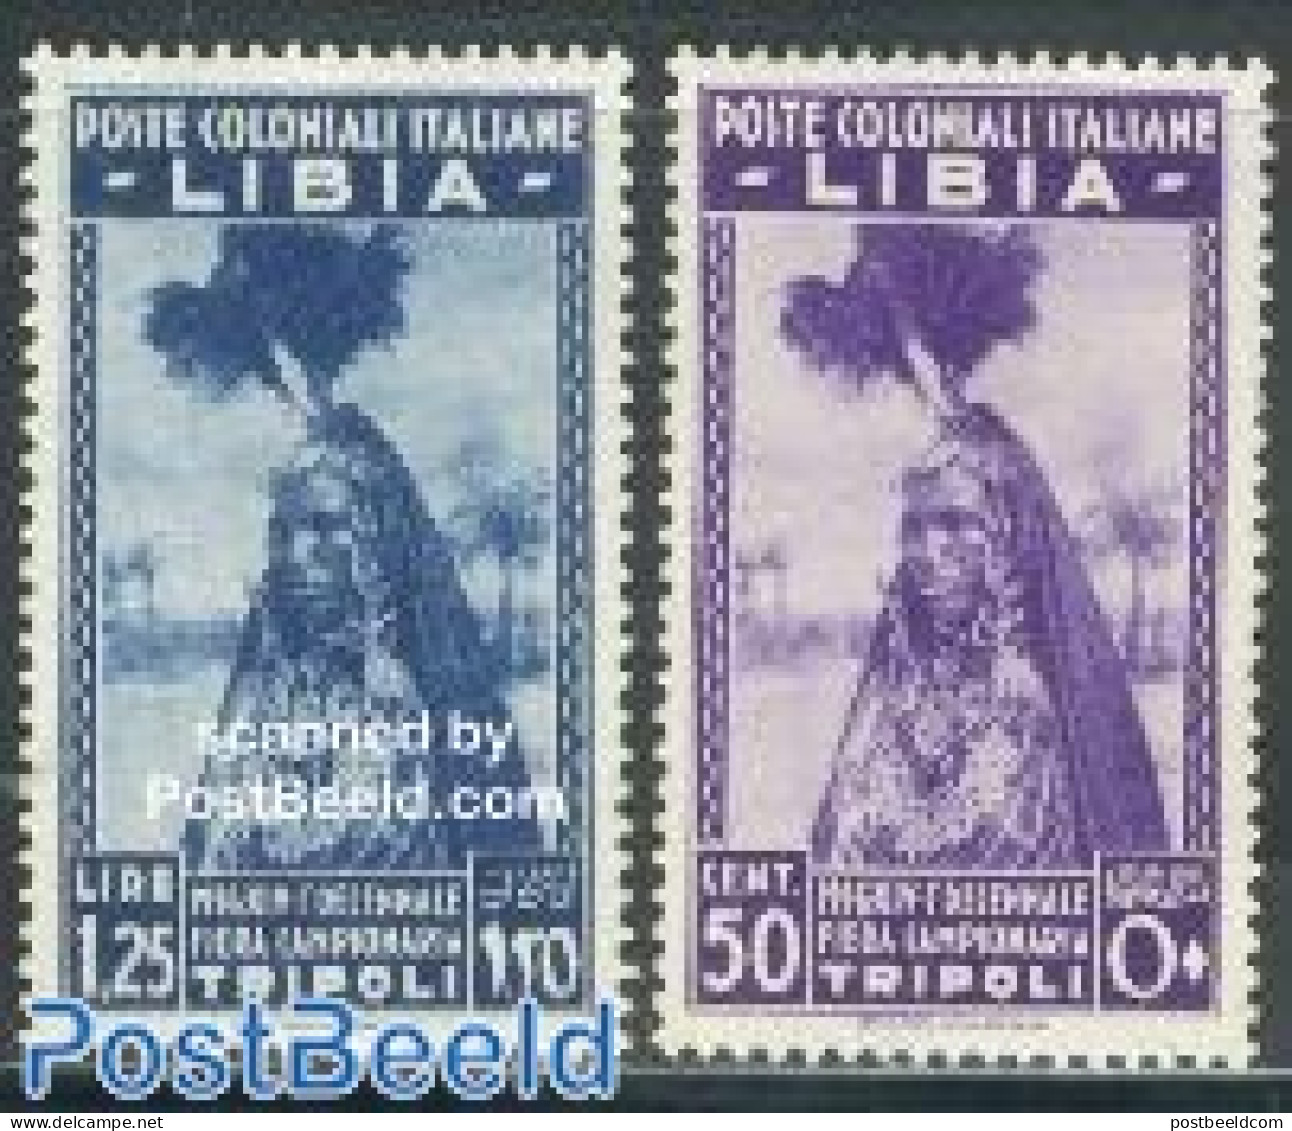 Italian Lybia 1936 Export Fair 2v, Mint NH - Libië